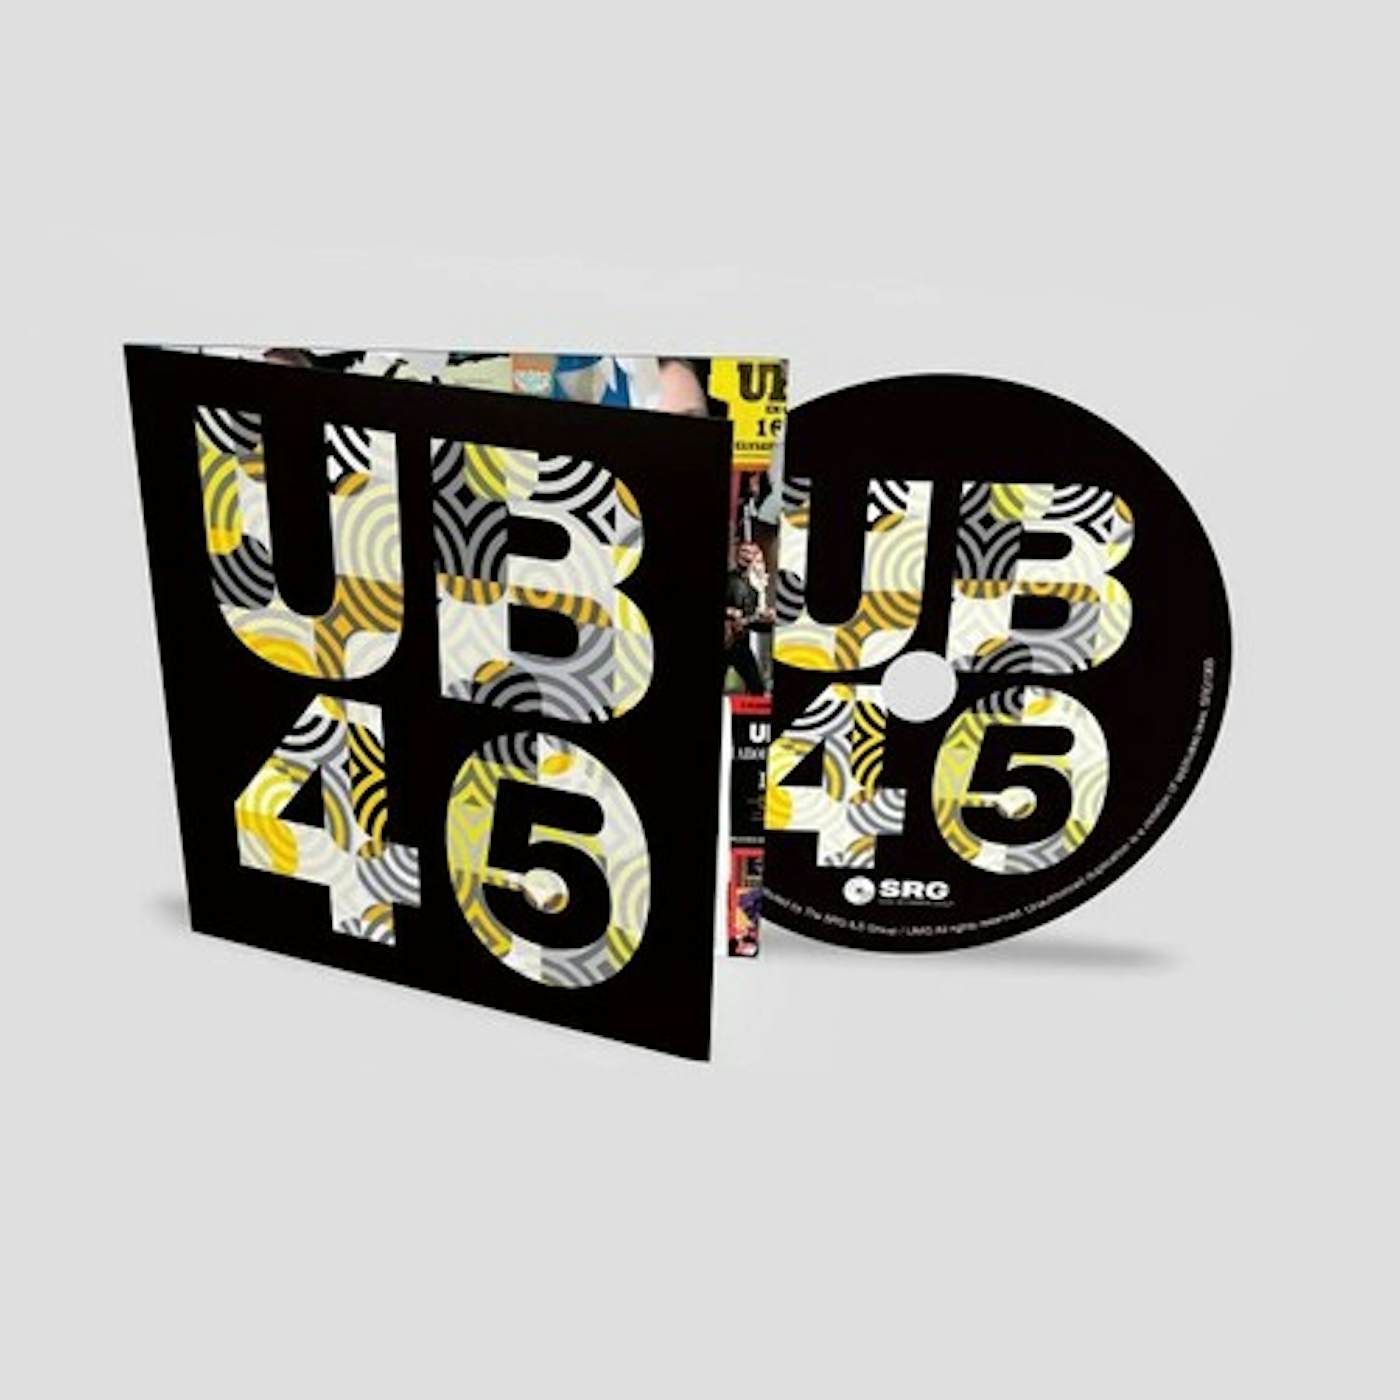 UB40 UB45 CD